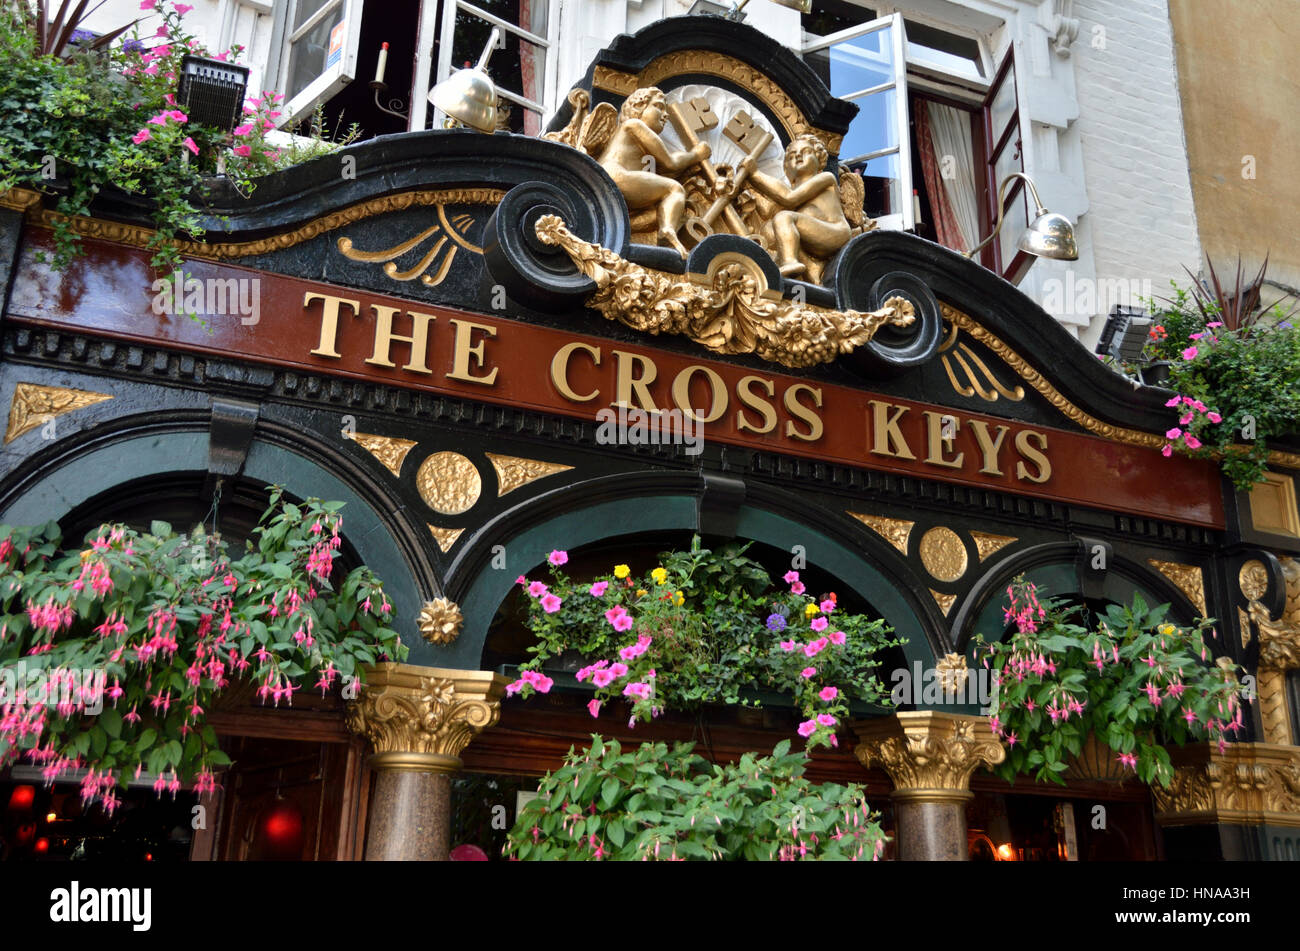 The Cross Keys pub in Covent Garden, London, UK. Stock Photo